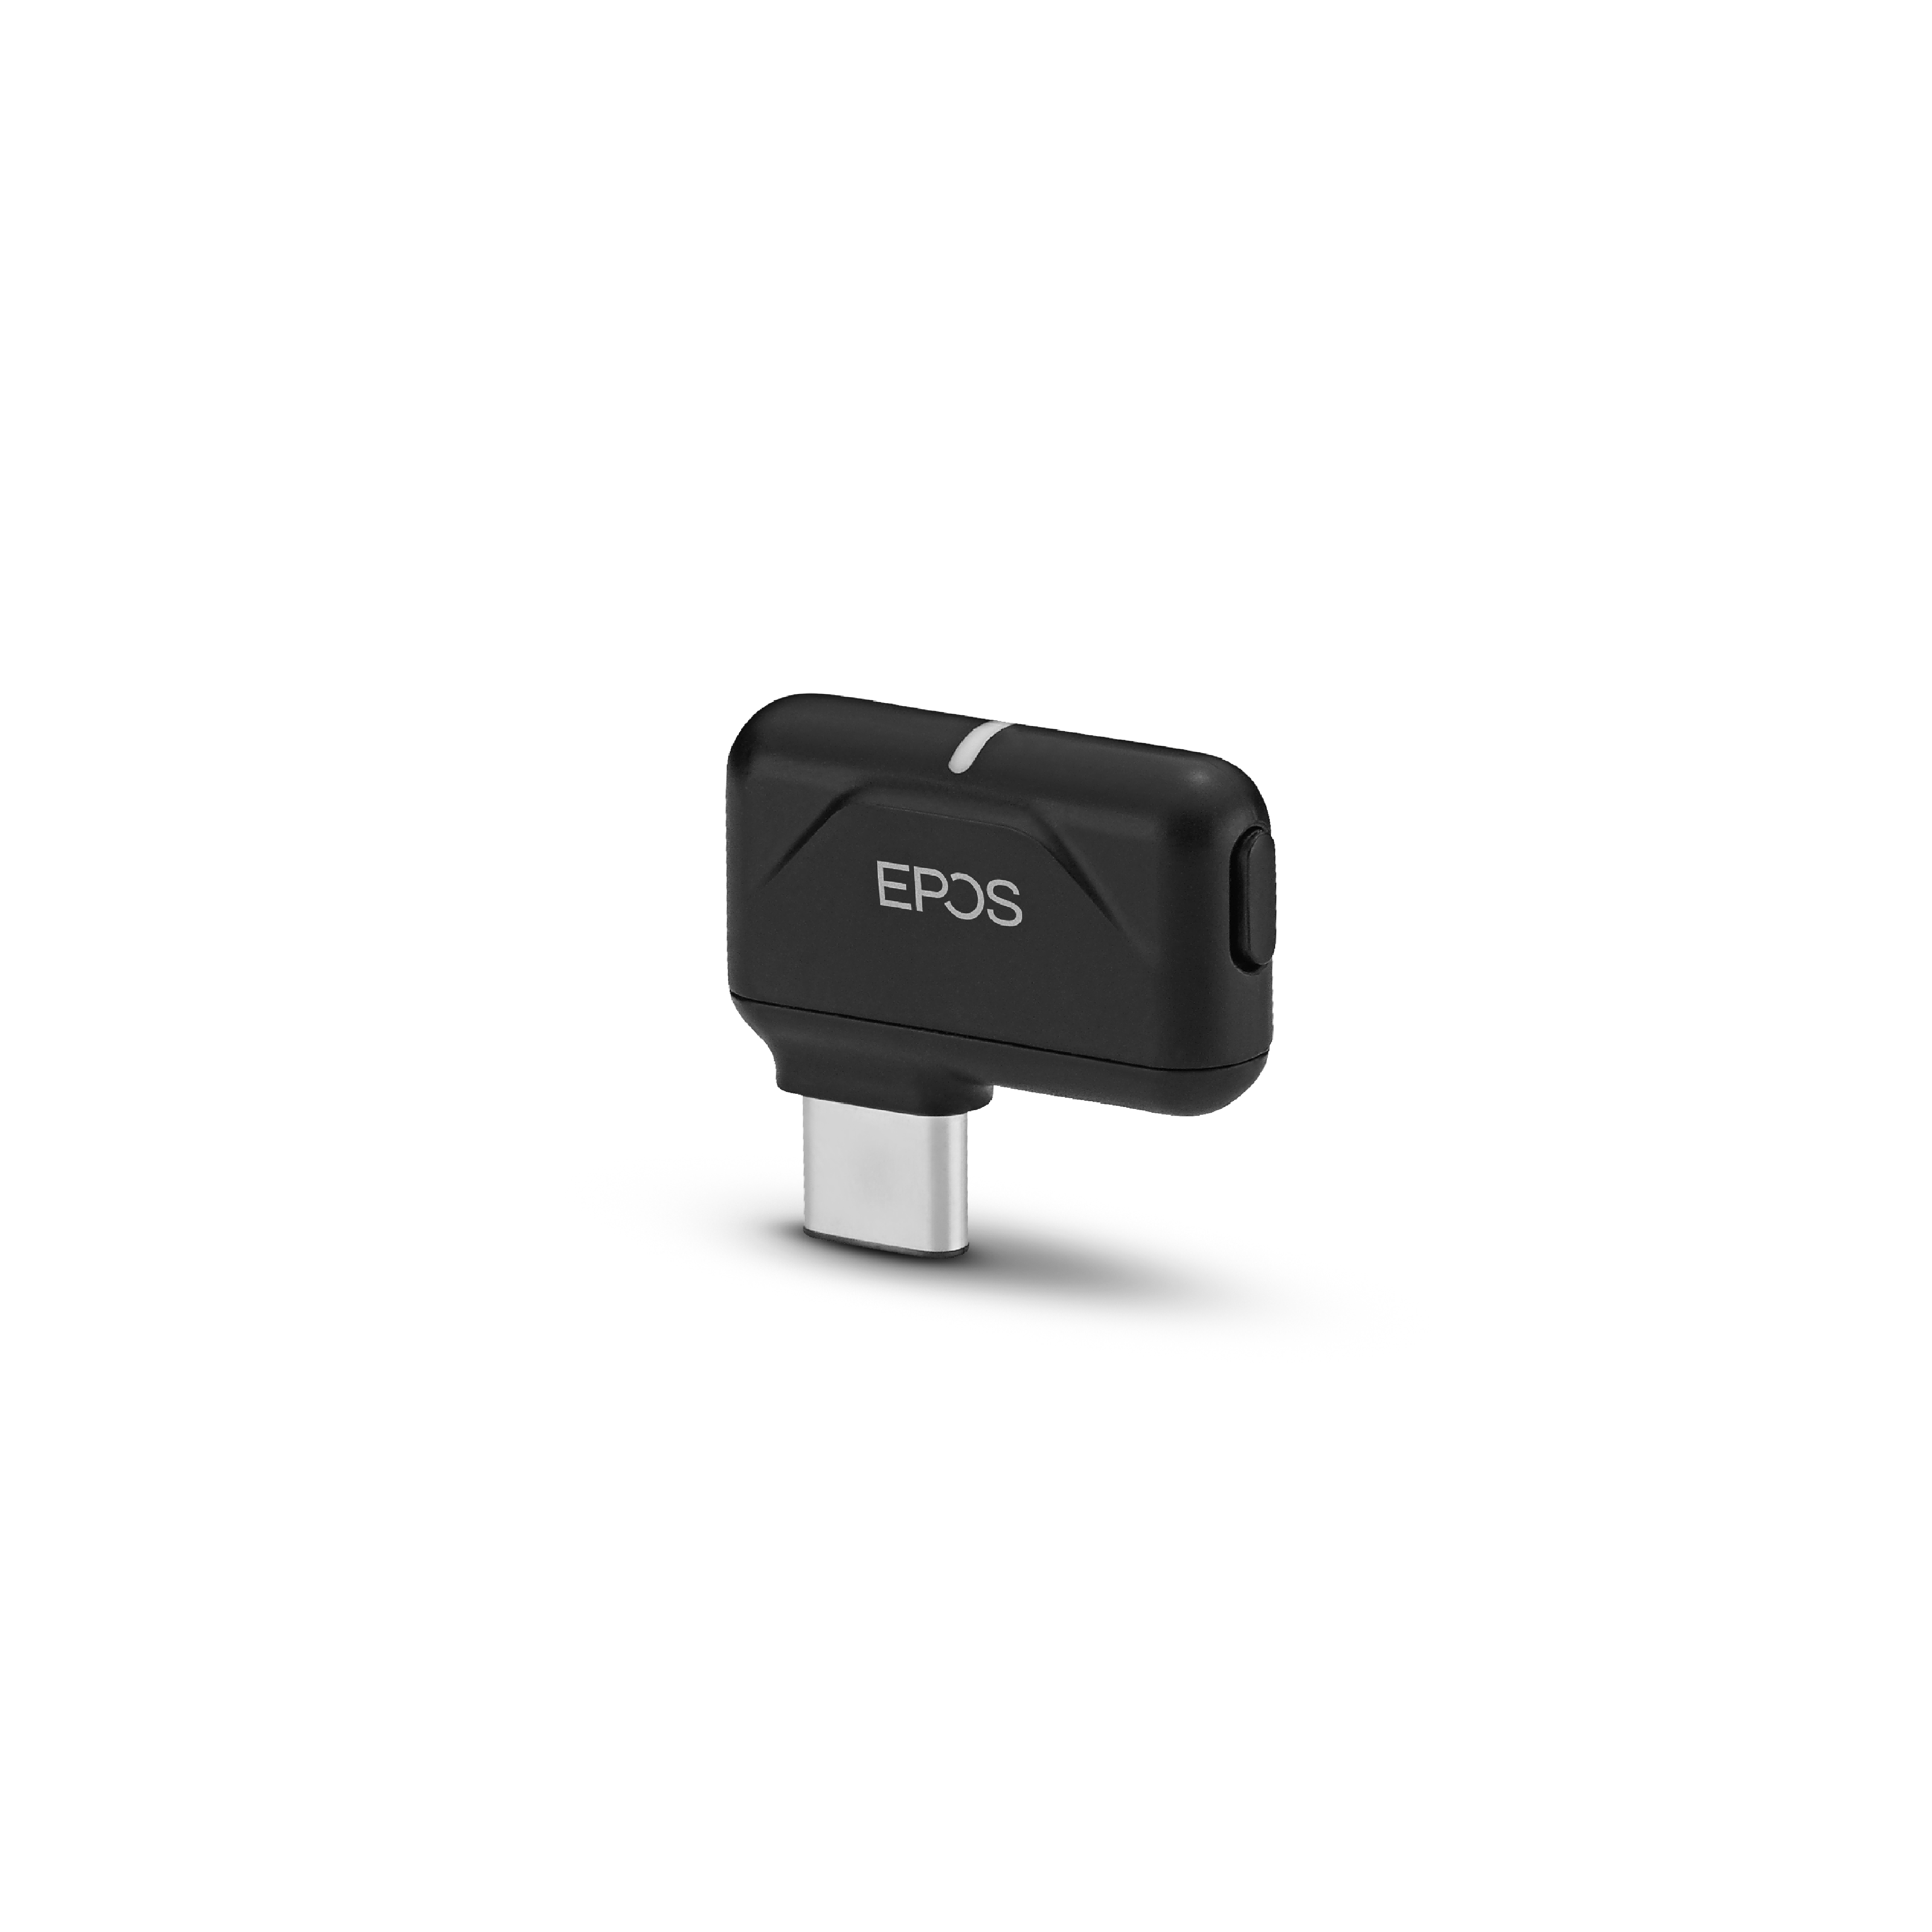 Sennheiser BTD 800 USB ML Dongle